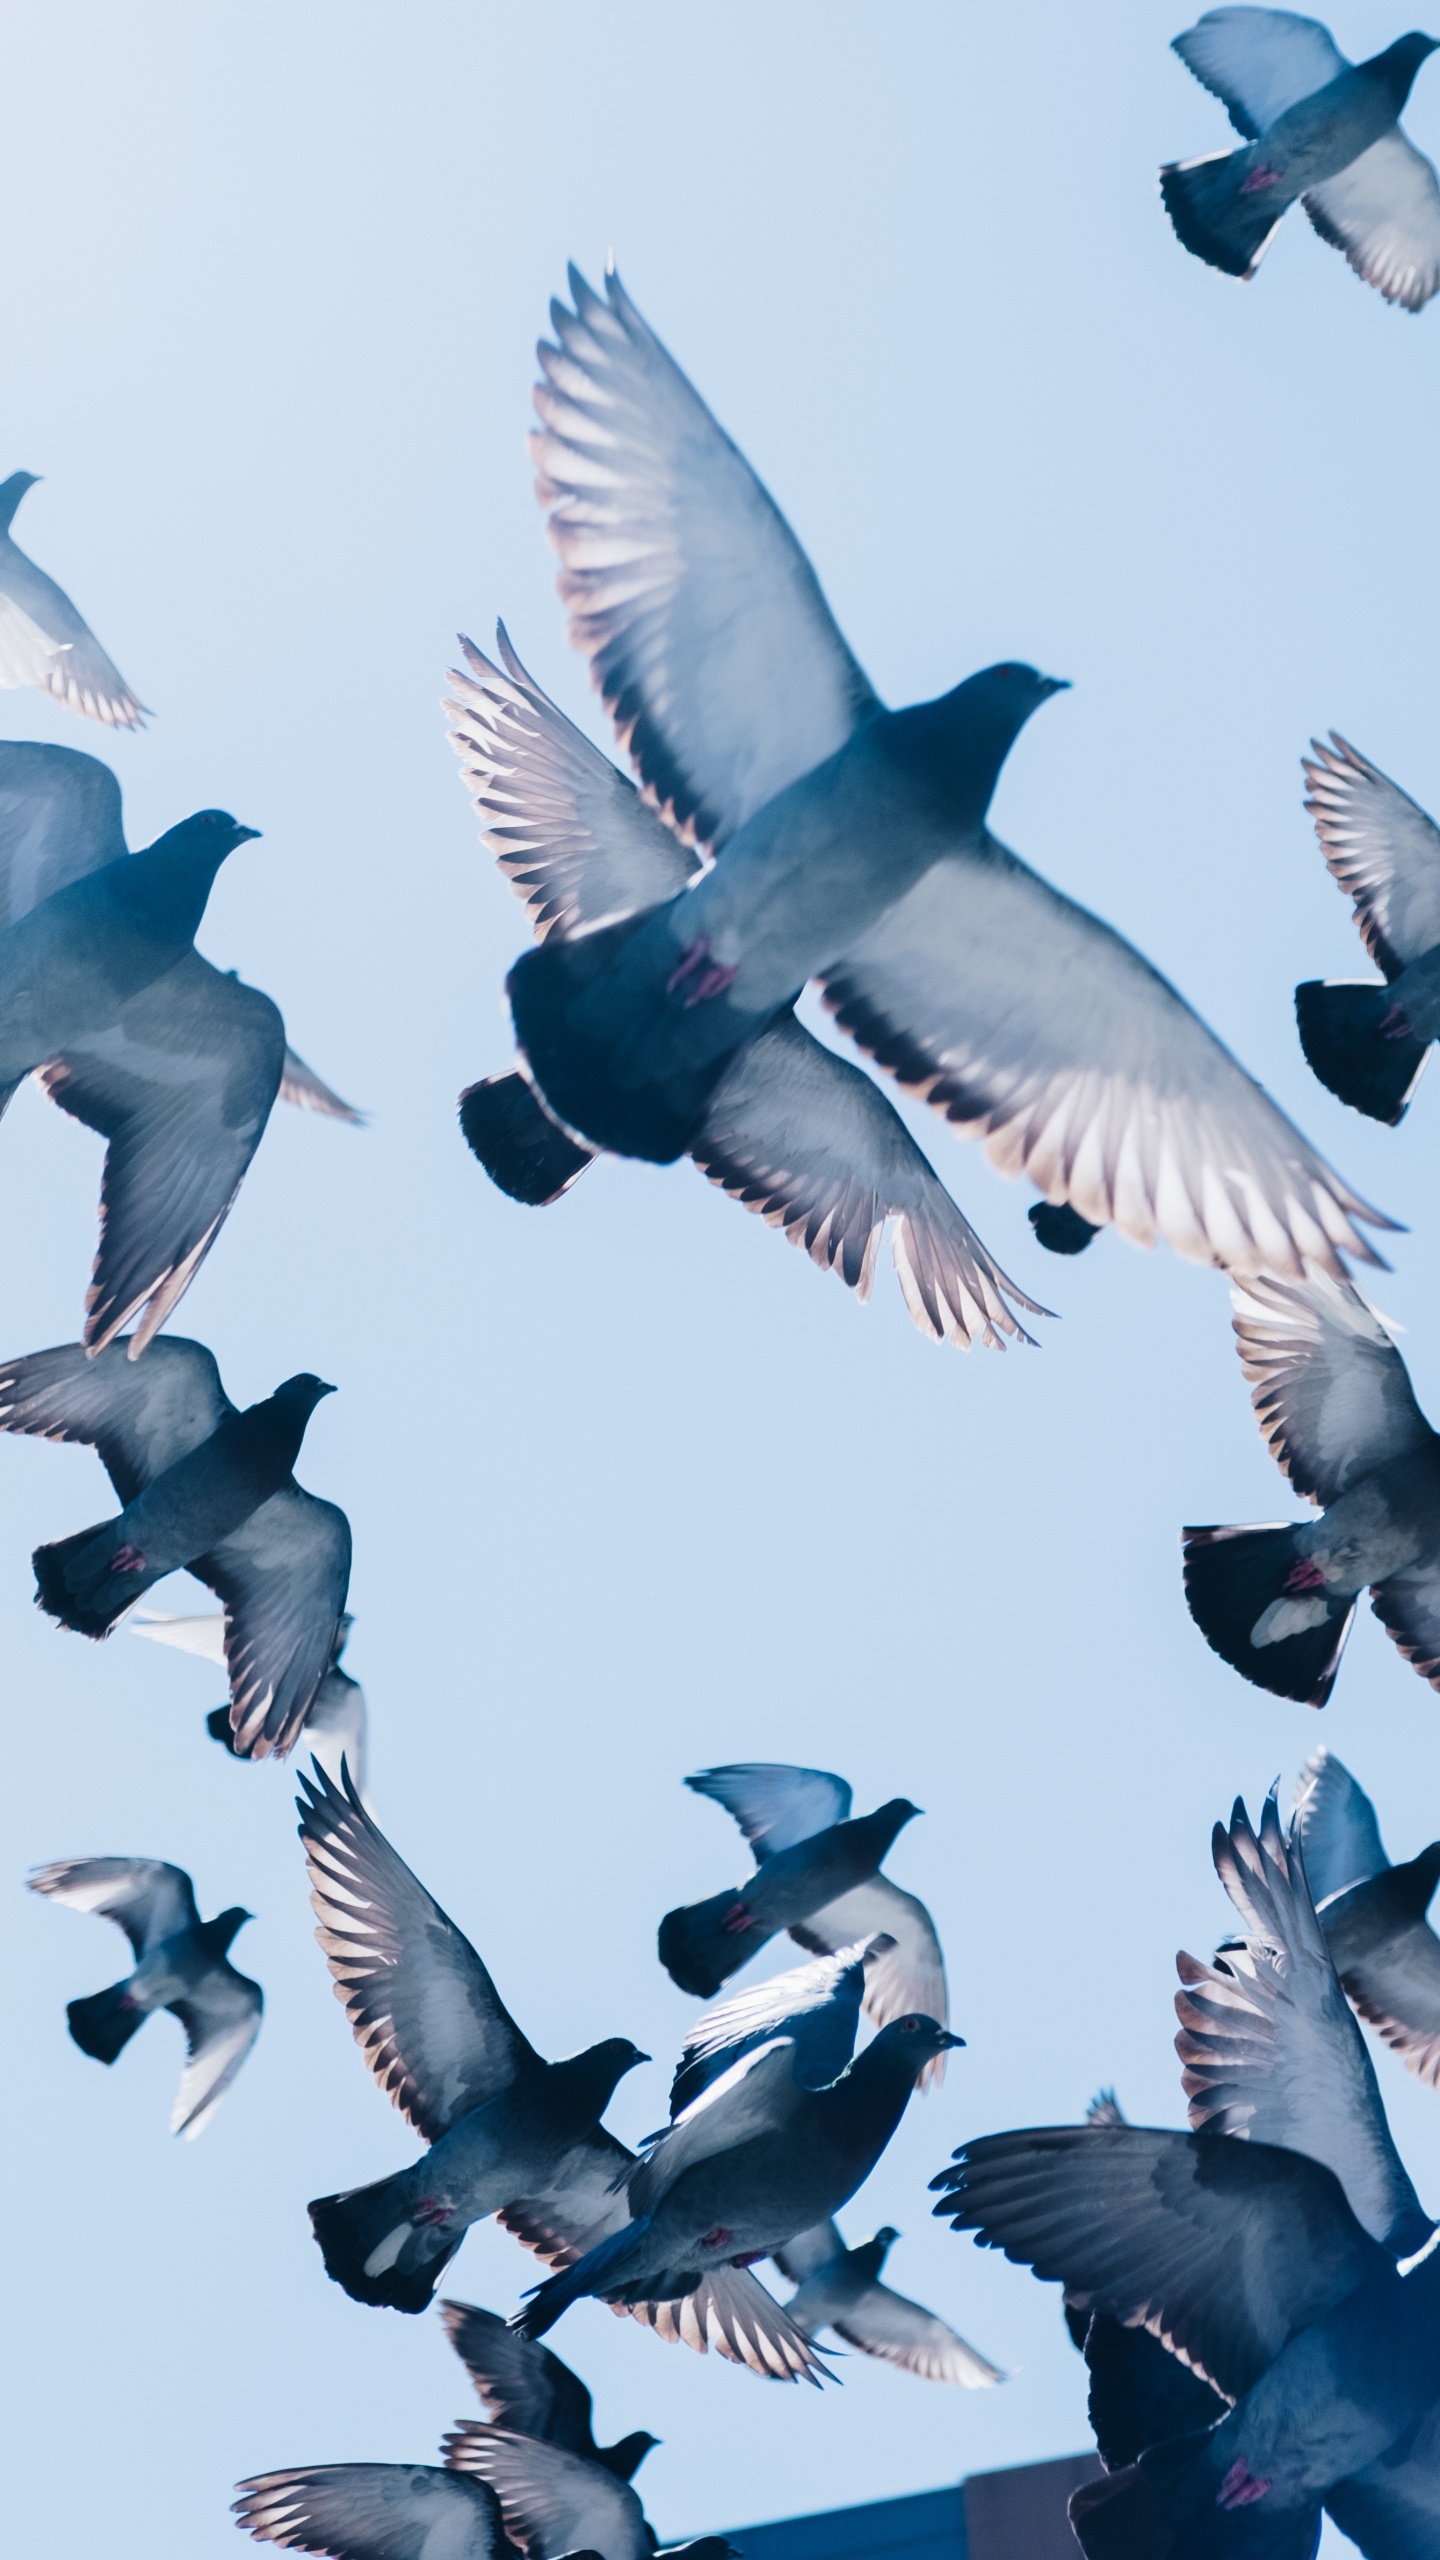 Flock of Birds Flying Under Blue Sky During Daytime. Wallpaper in 1440x2560 Resolution